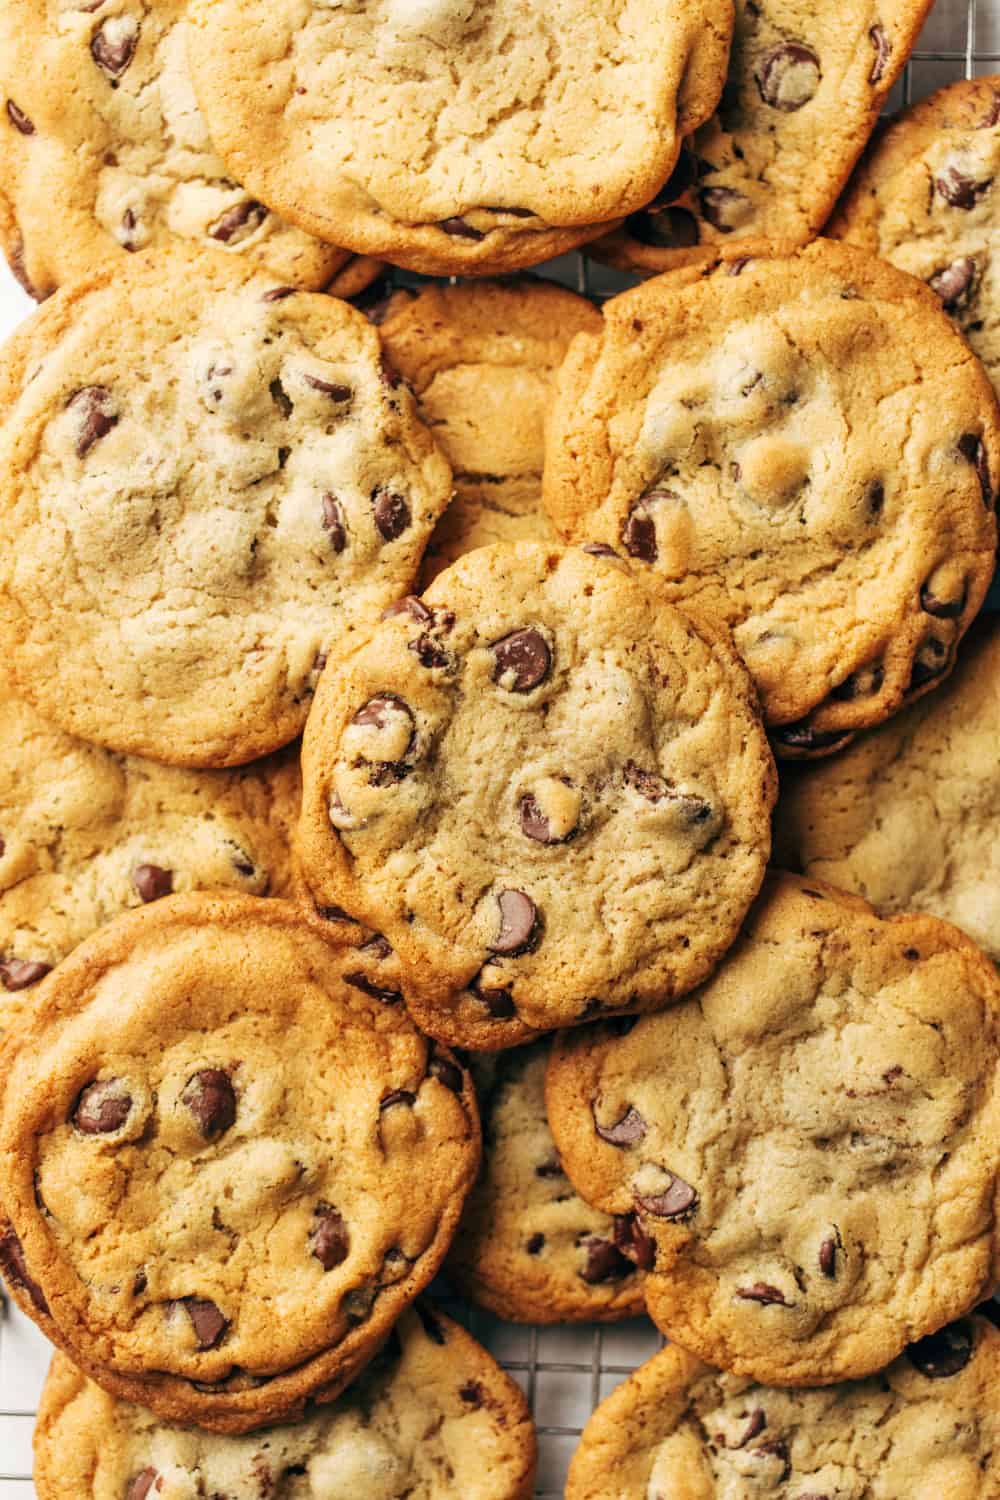 https://www.mybakingaddiction.com/wp-content/uploads/2011/05/Baked-Chocolate-Chip-Cookies-3-of-16_resized.jpg